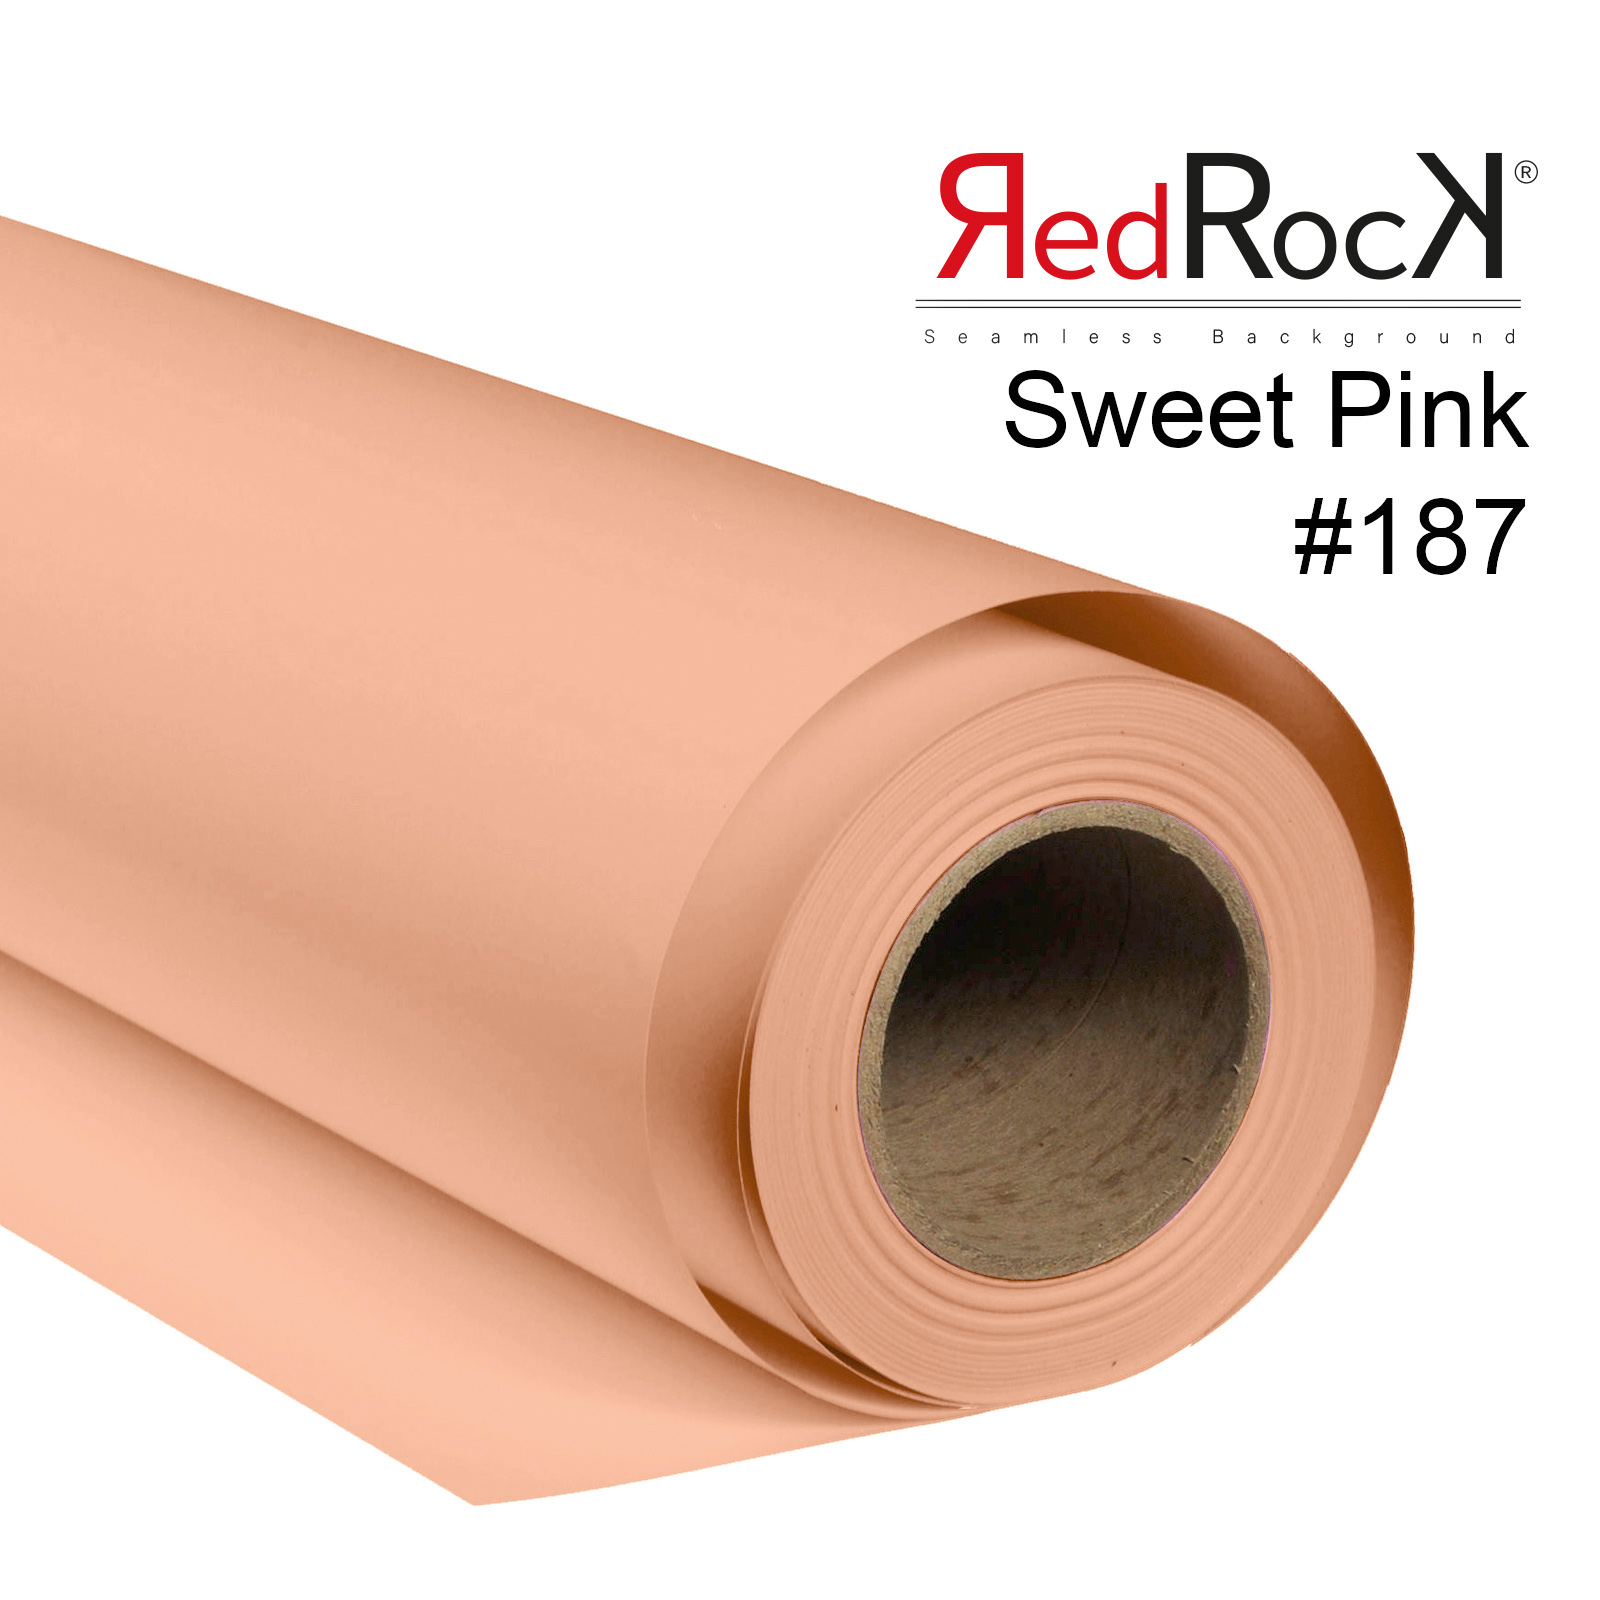 RedRock Sweet Pink Background Paper 1.35x10 m #187